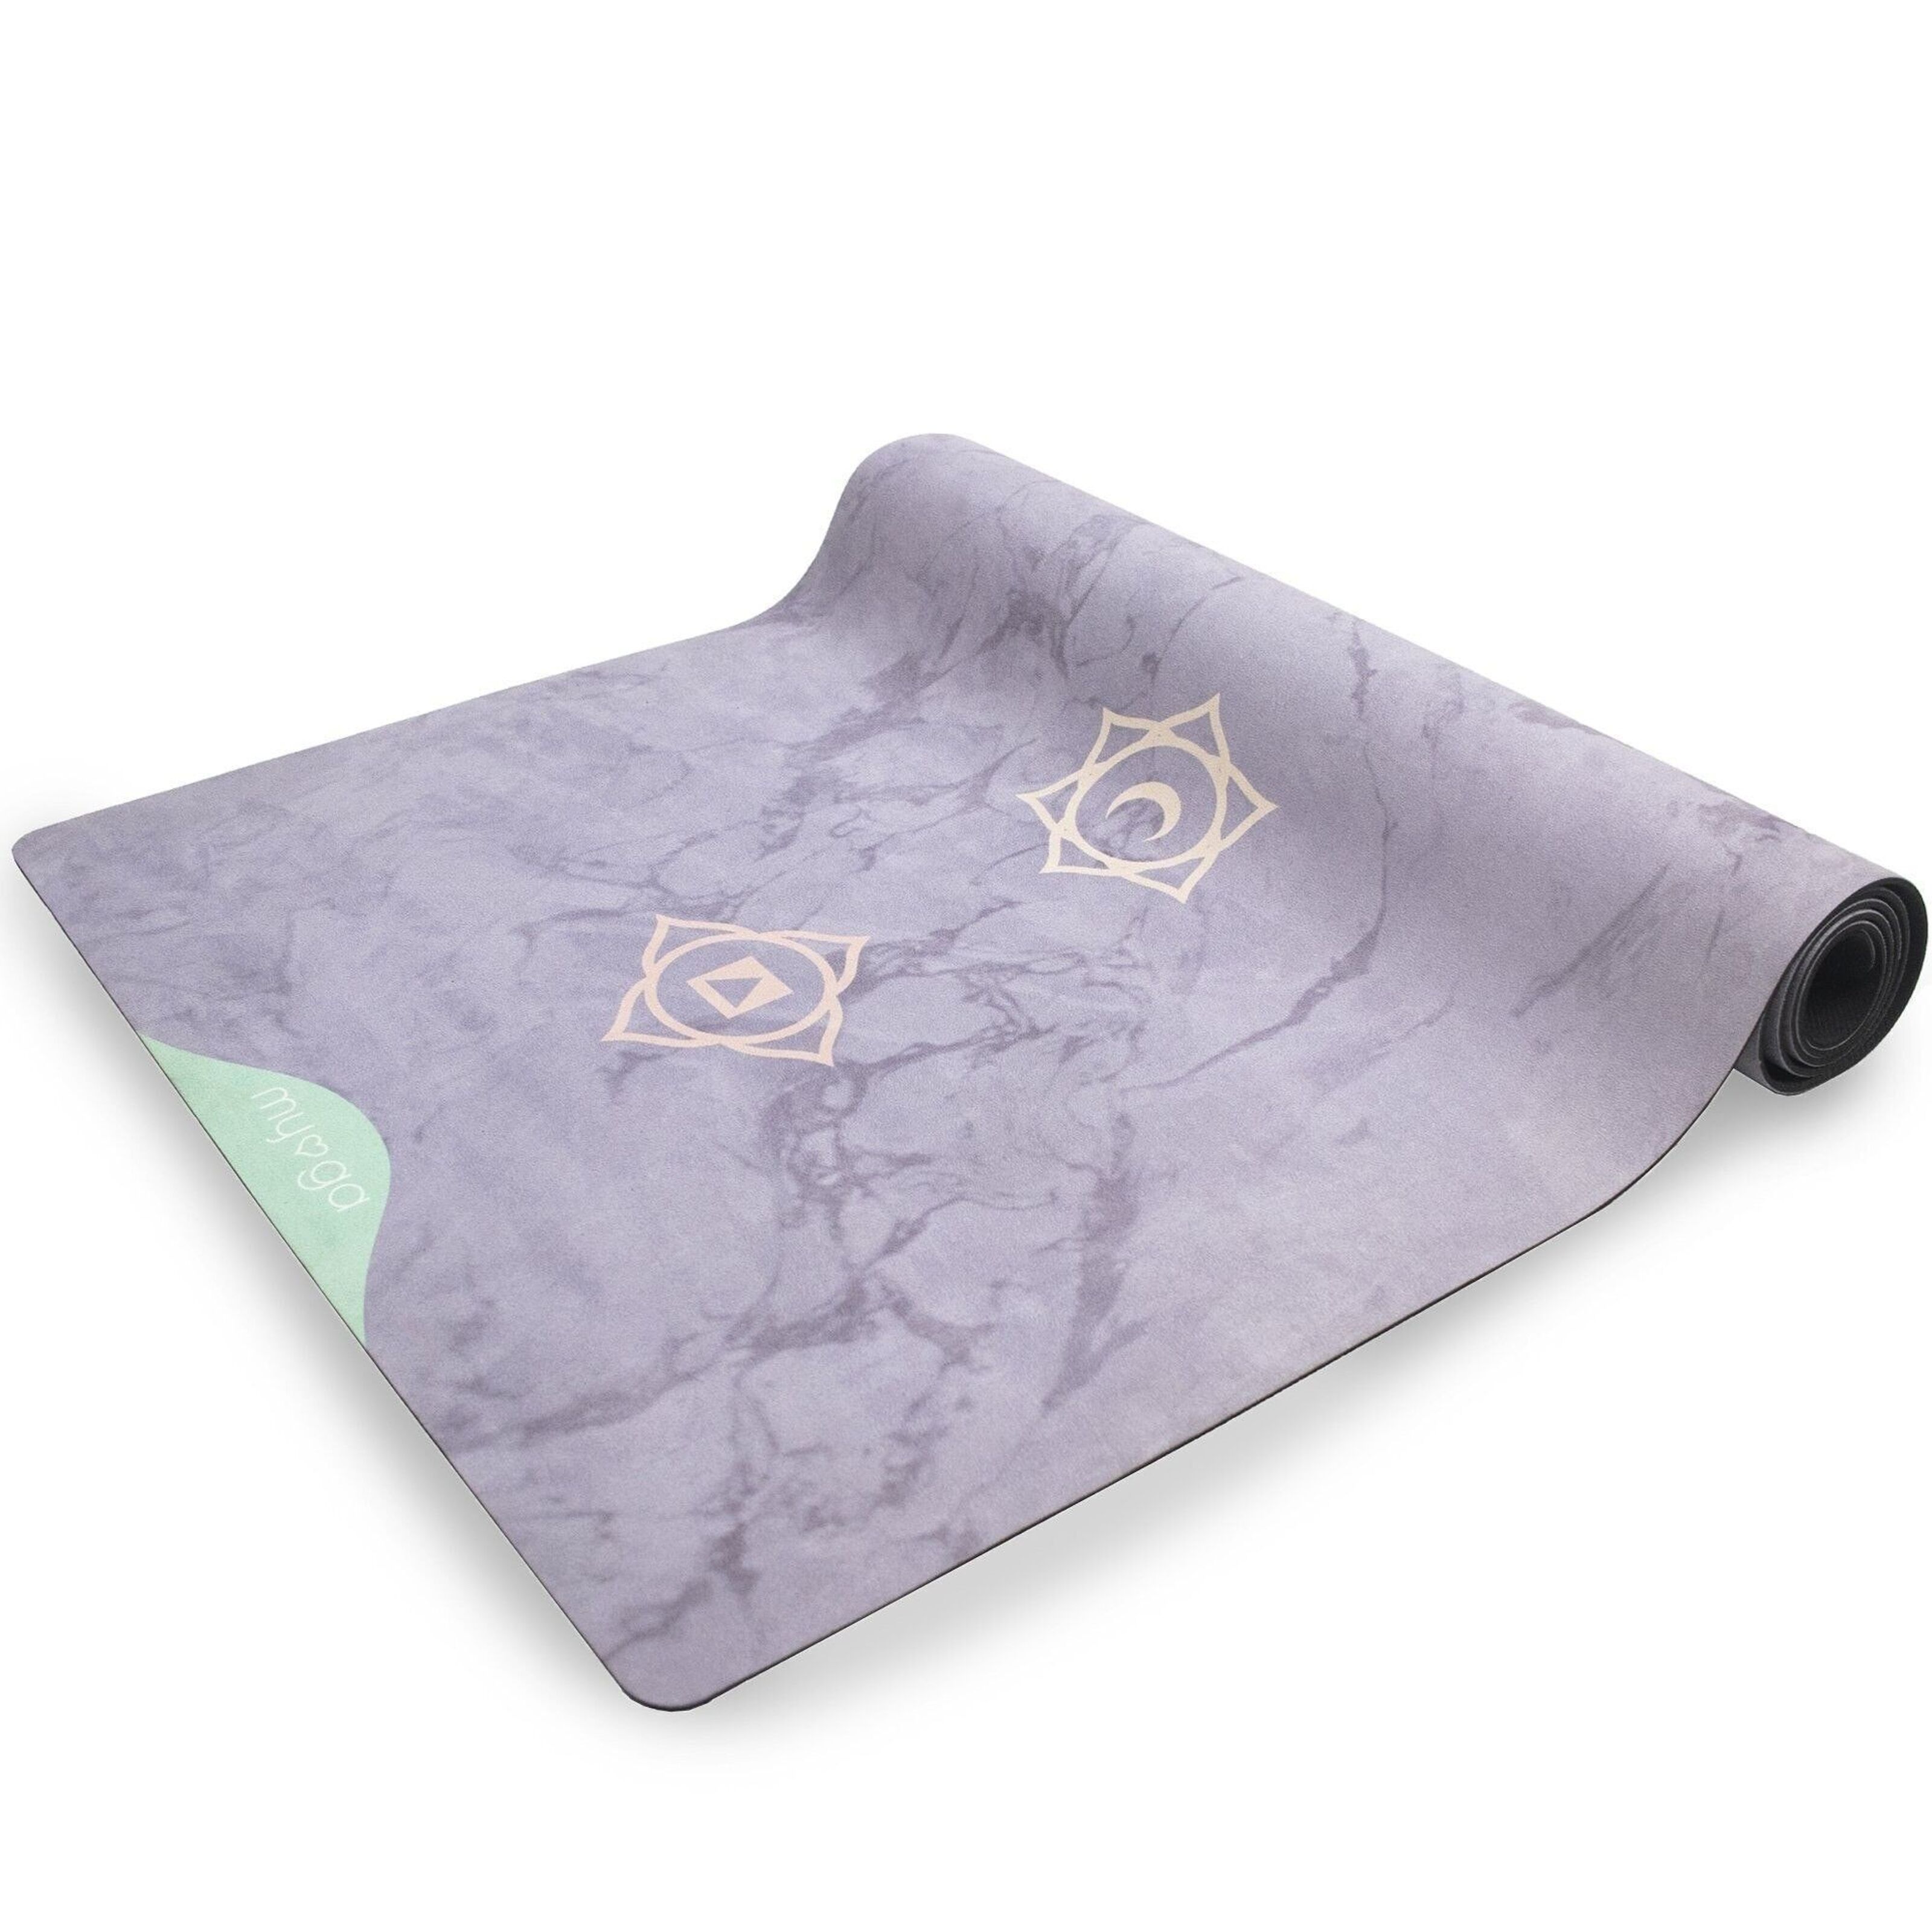 Yoga Studio Designed Grey Mat Mandala Yoga Mat 6mm